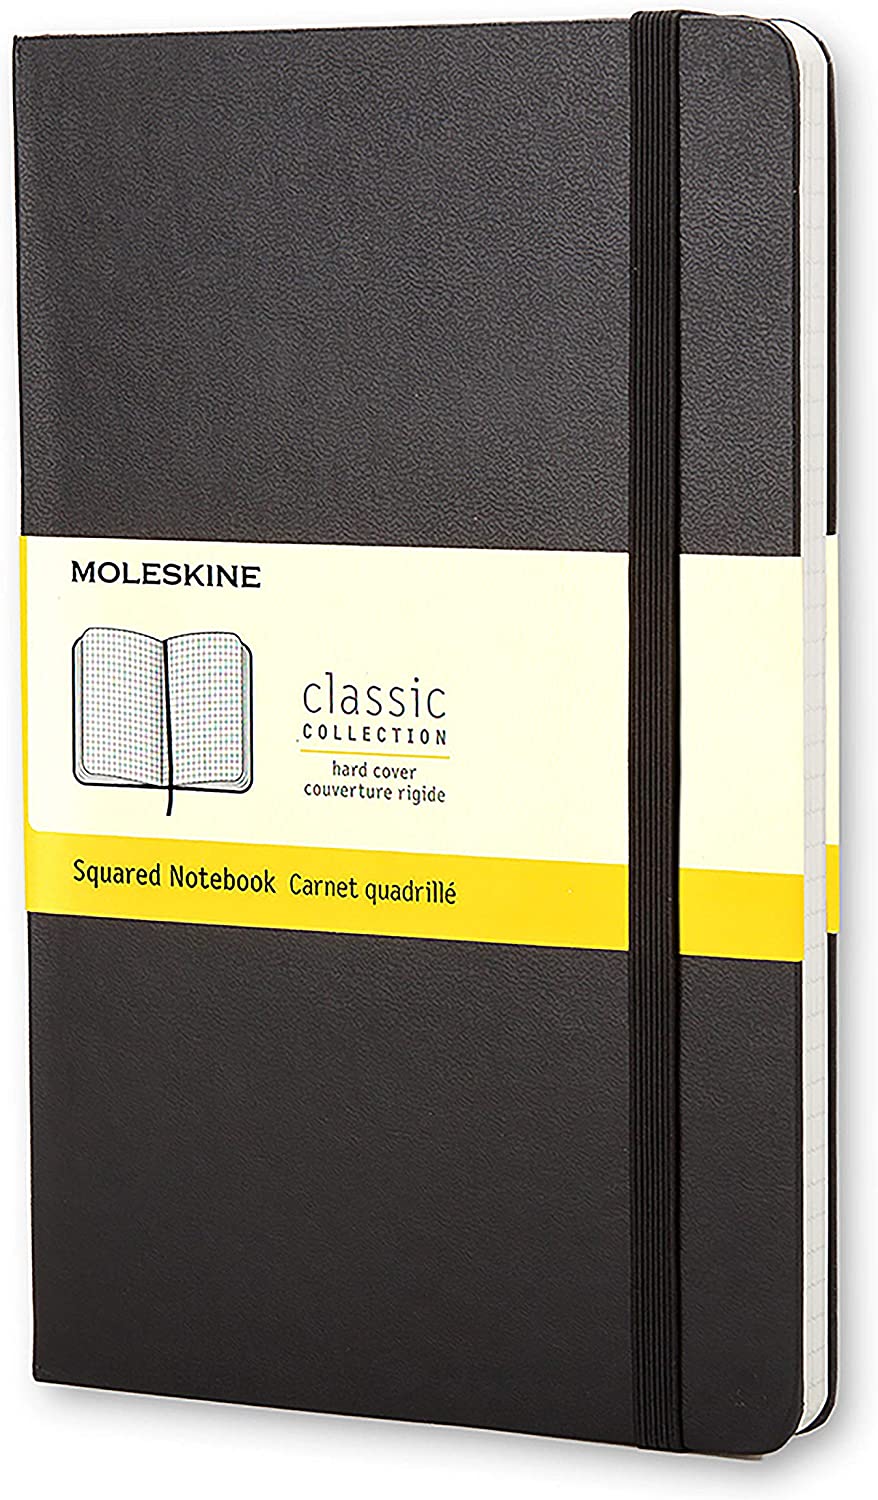 Moleskine Notesbog Pocket / Black / Hardcover Moleskine Classic notesbog - Squared